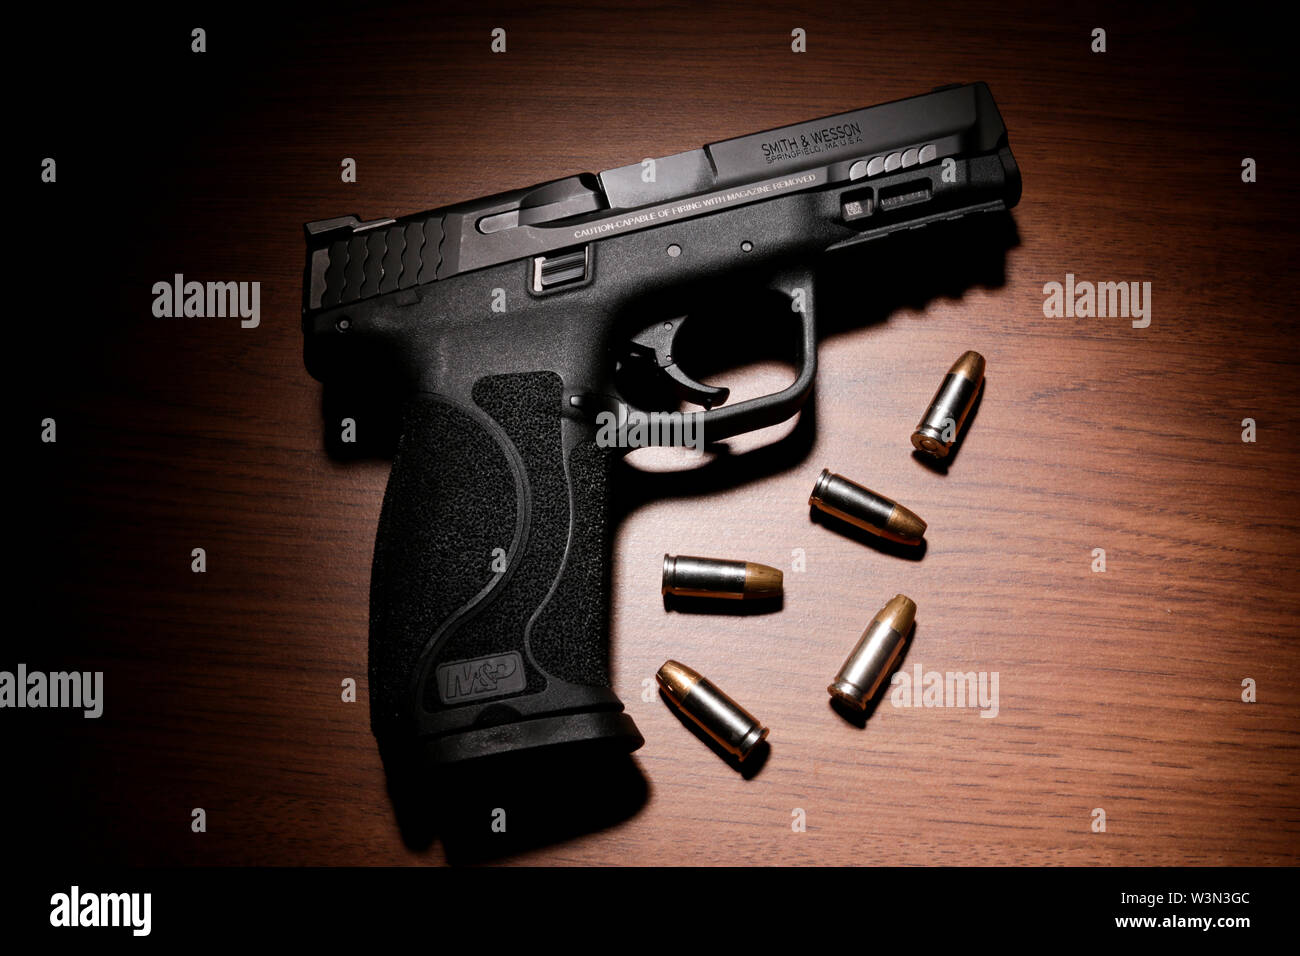 Smith and Wesson M&P9 M2.0 Handgun Stock Photo